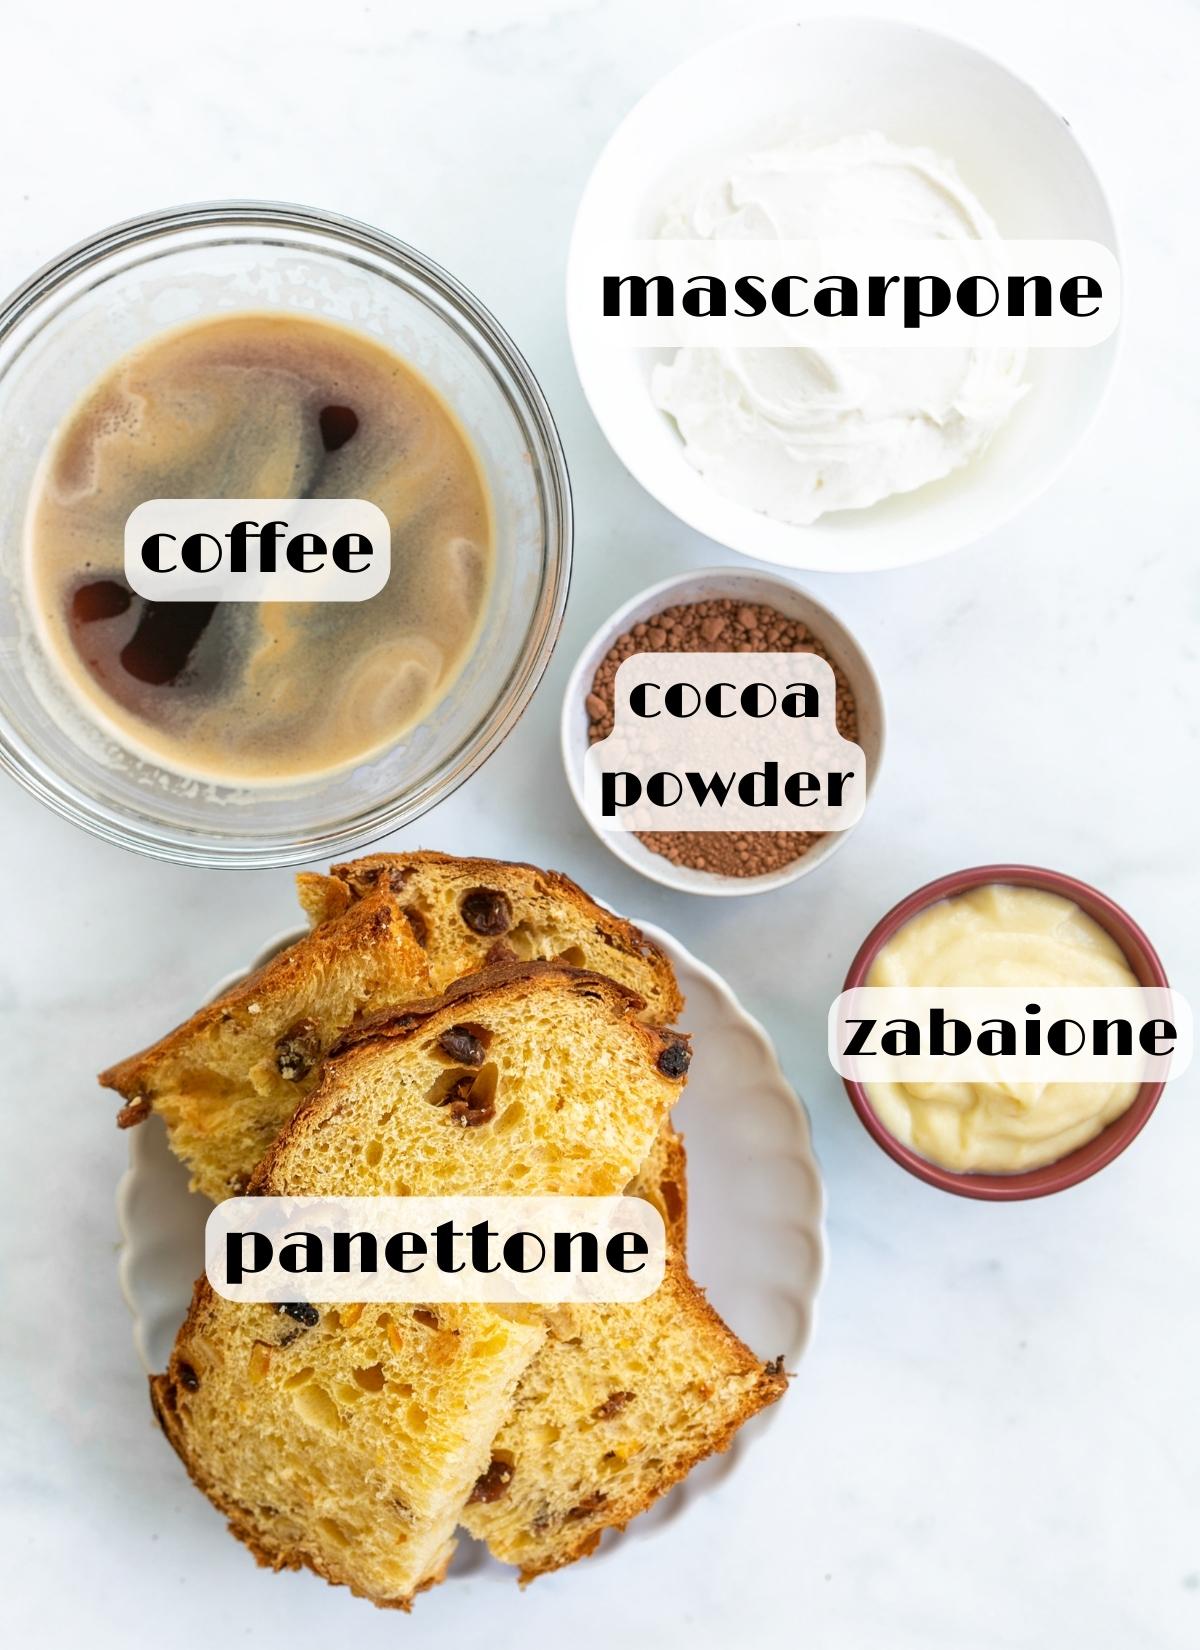 panettone tiramisu ingredients: panettone, mascarpone, coffee, zabaglione cream and cocoa powder.